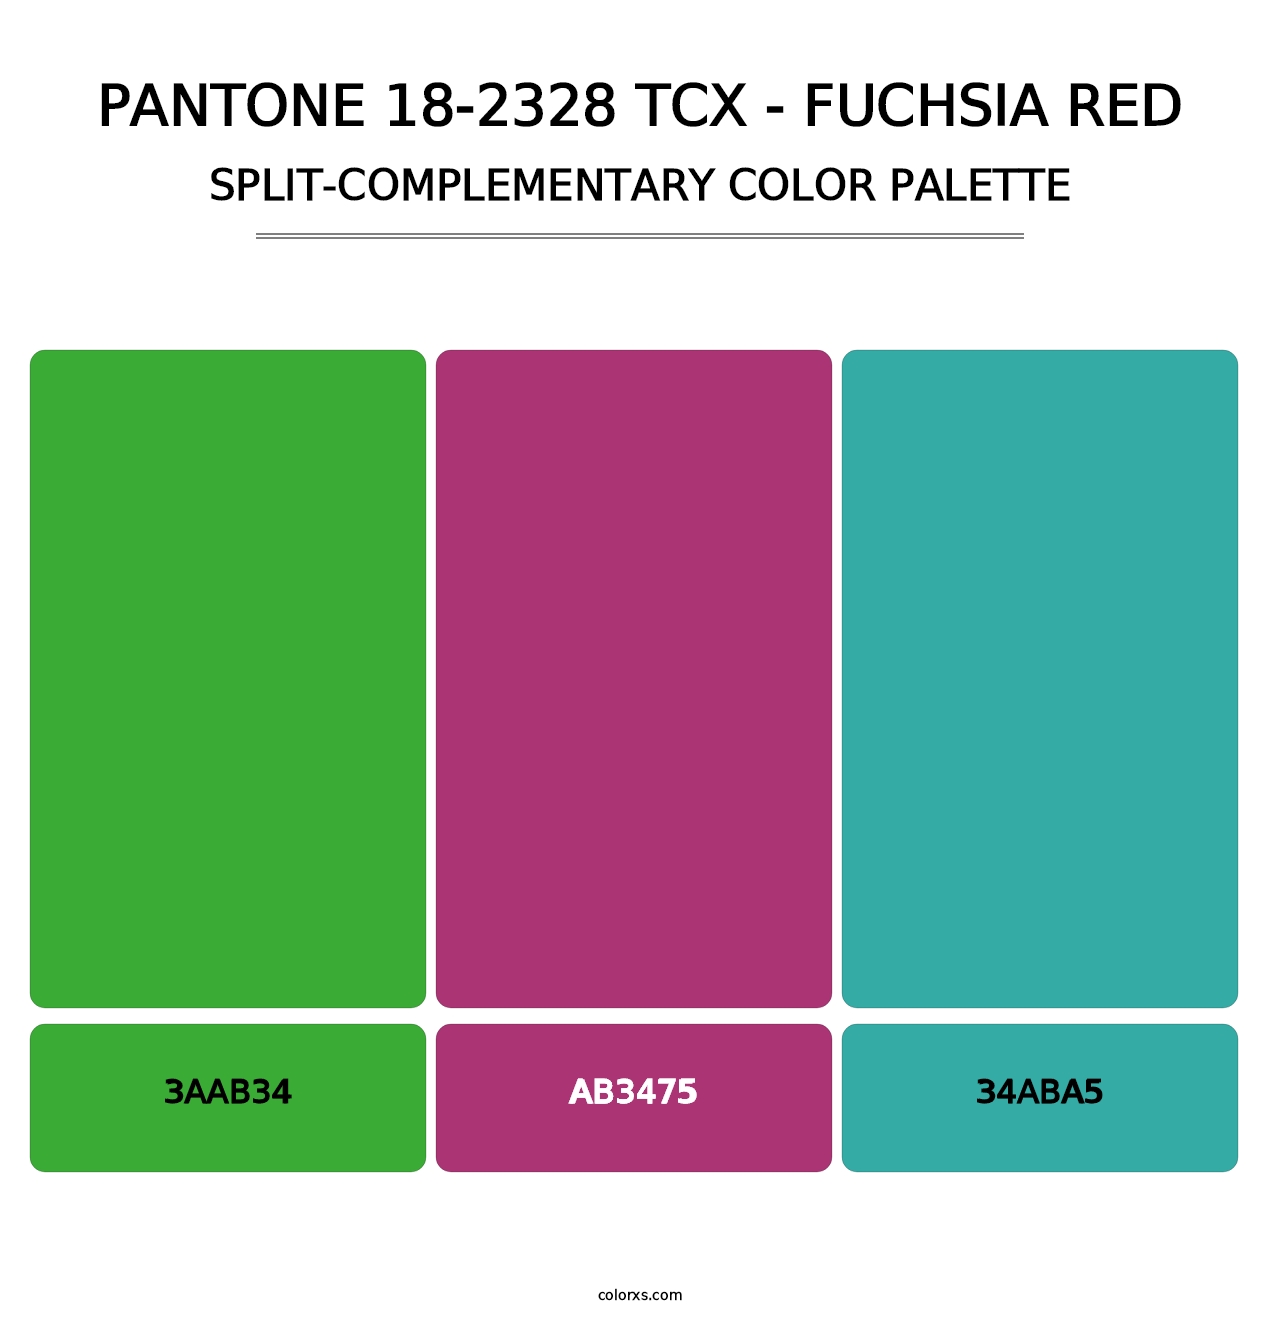 PANTONE 18-2328 TCX - Fuchsia Red - Split-Complementary Color Palette